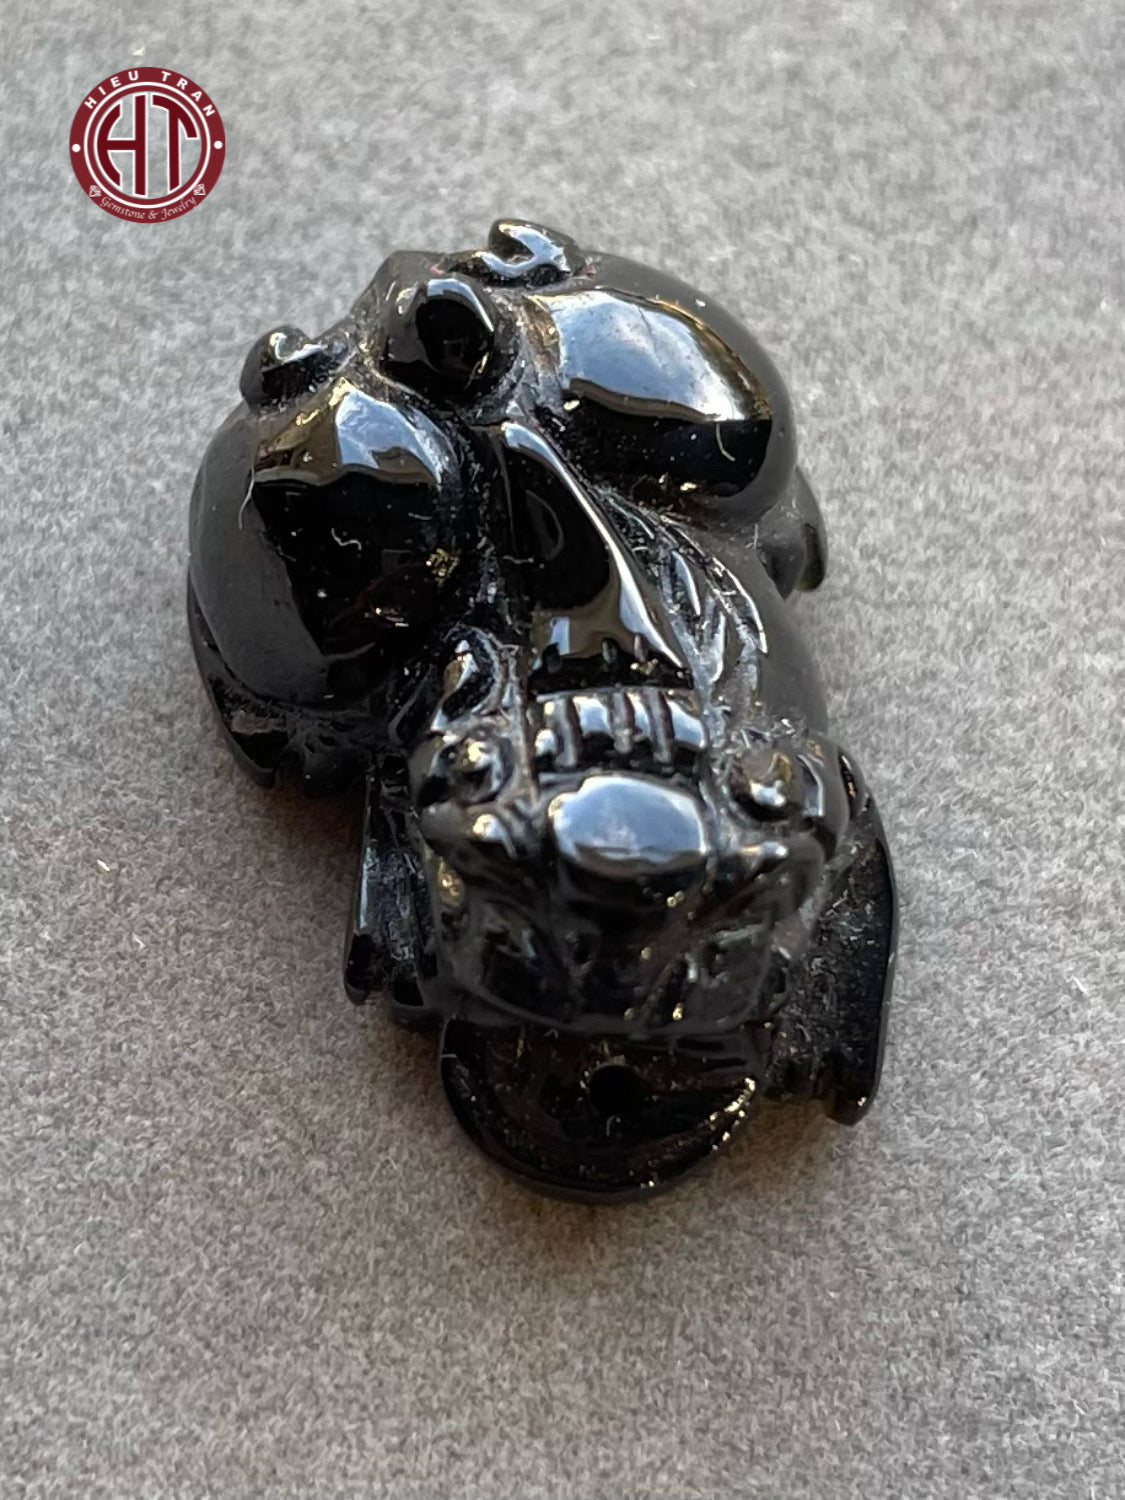 Obsidian Pixiu Black Pendant #P134